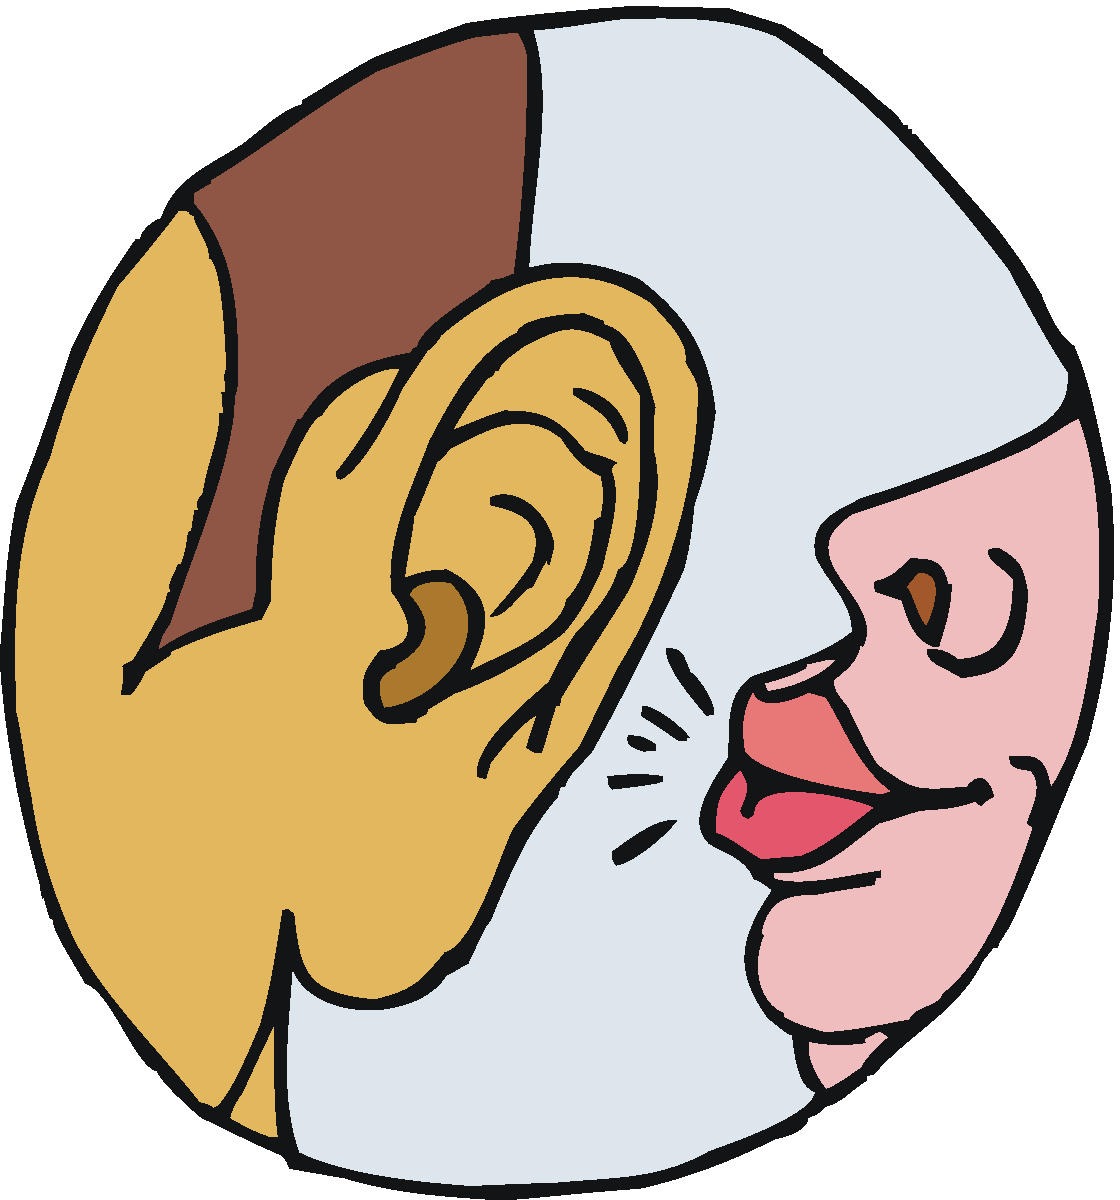 Listening Center Clipart | Free Download Clip Art | Free Clip Art ...